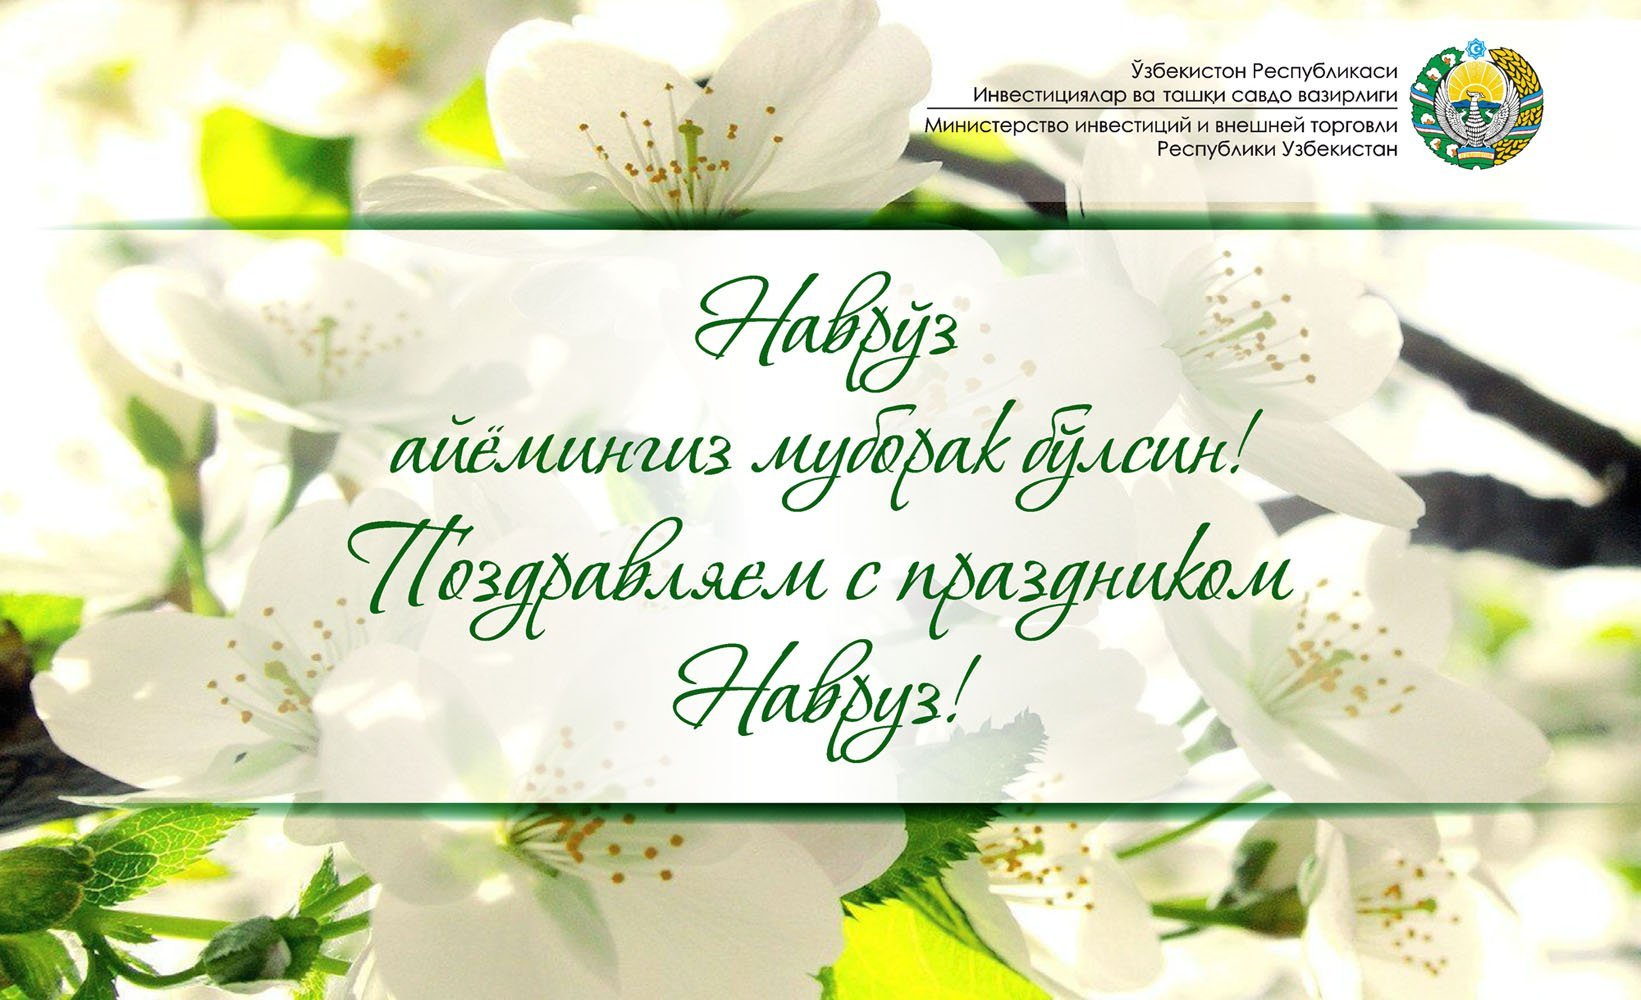 Навруз открытки картинки. Навруз открытки. Навруз поздравление картинки. Открытка с праздником Науруз. С праздником Навруз поздравления.